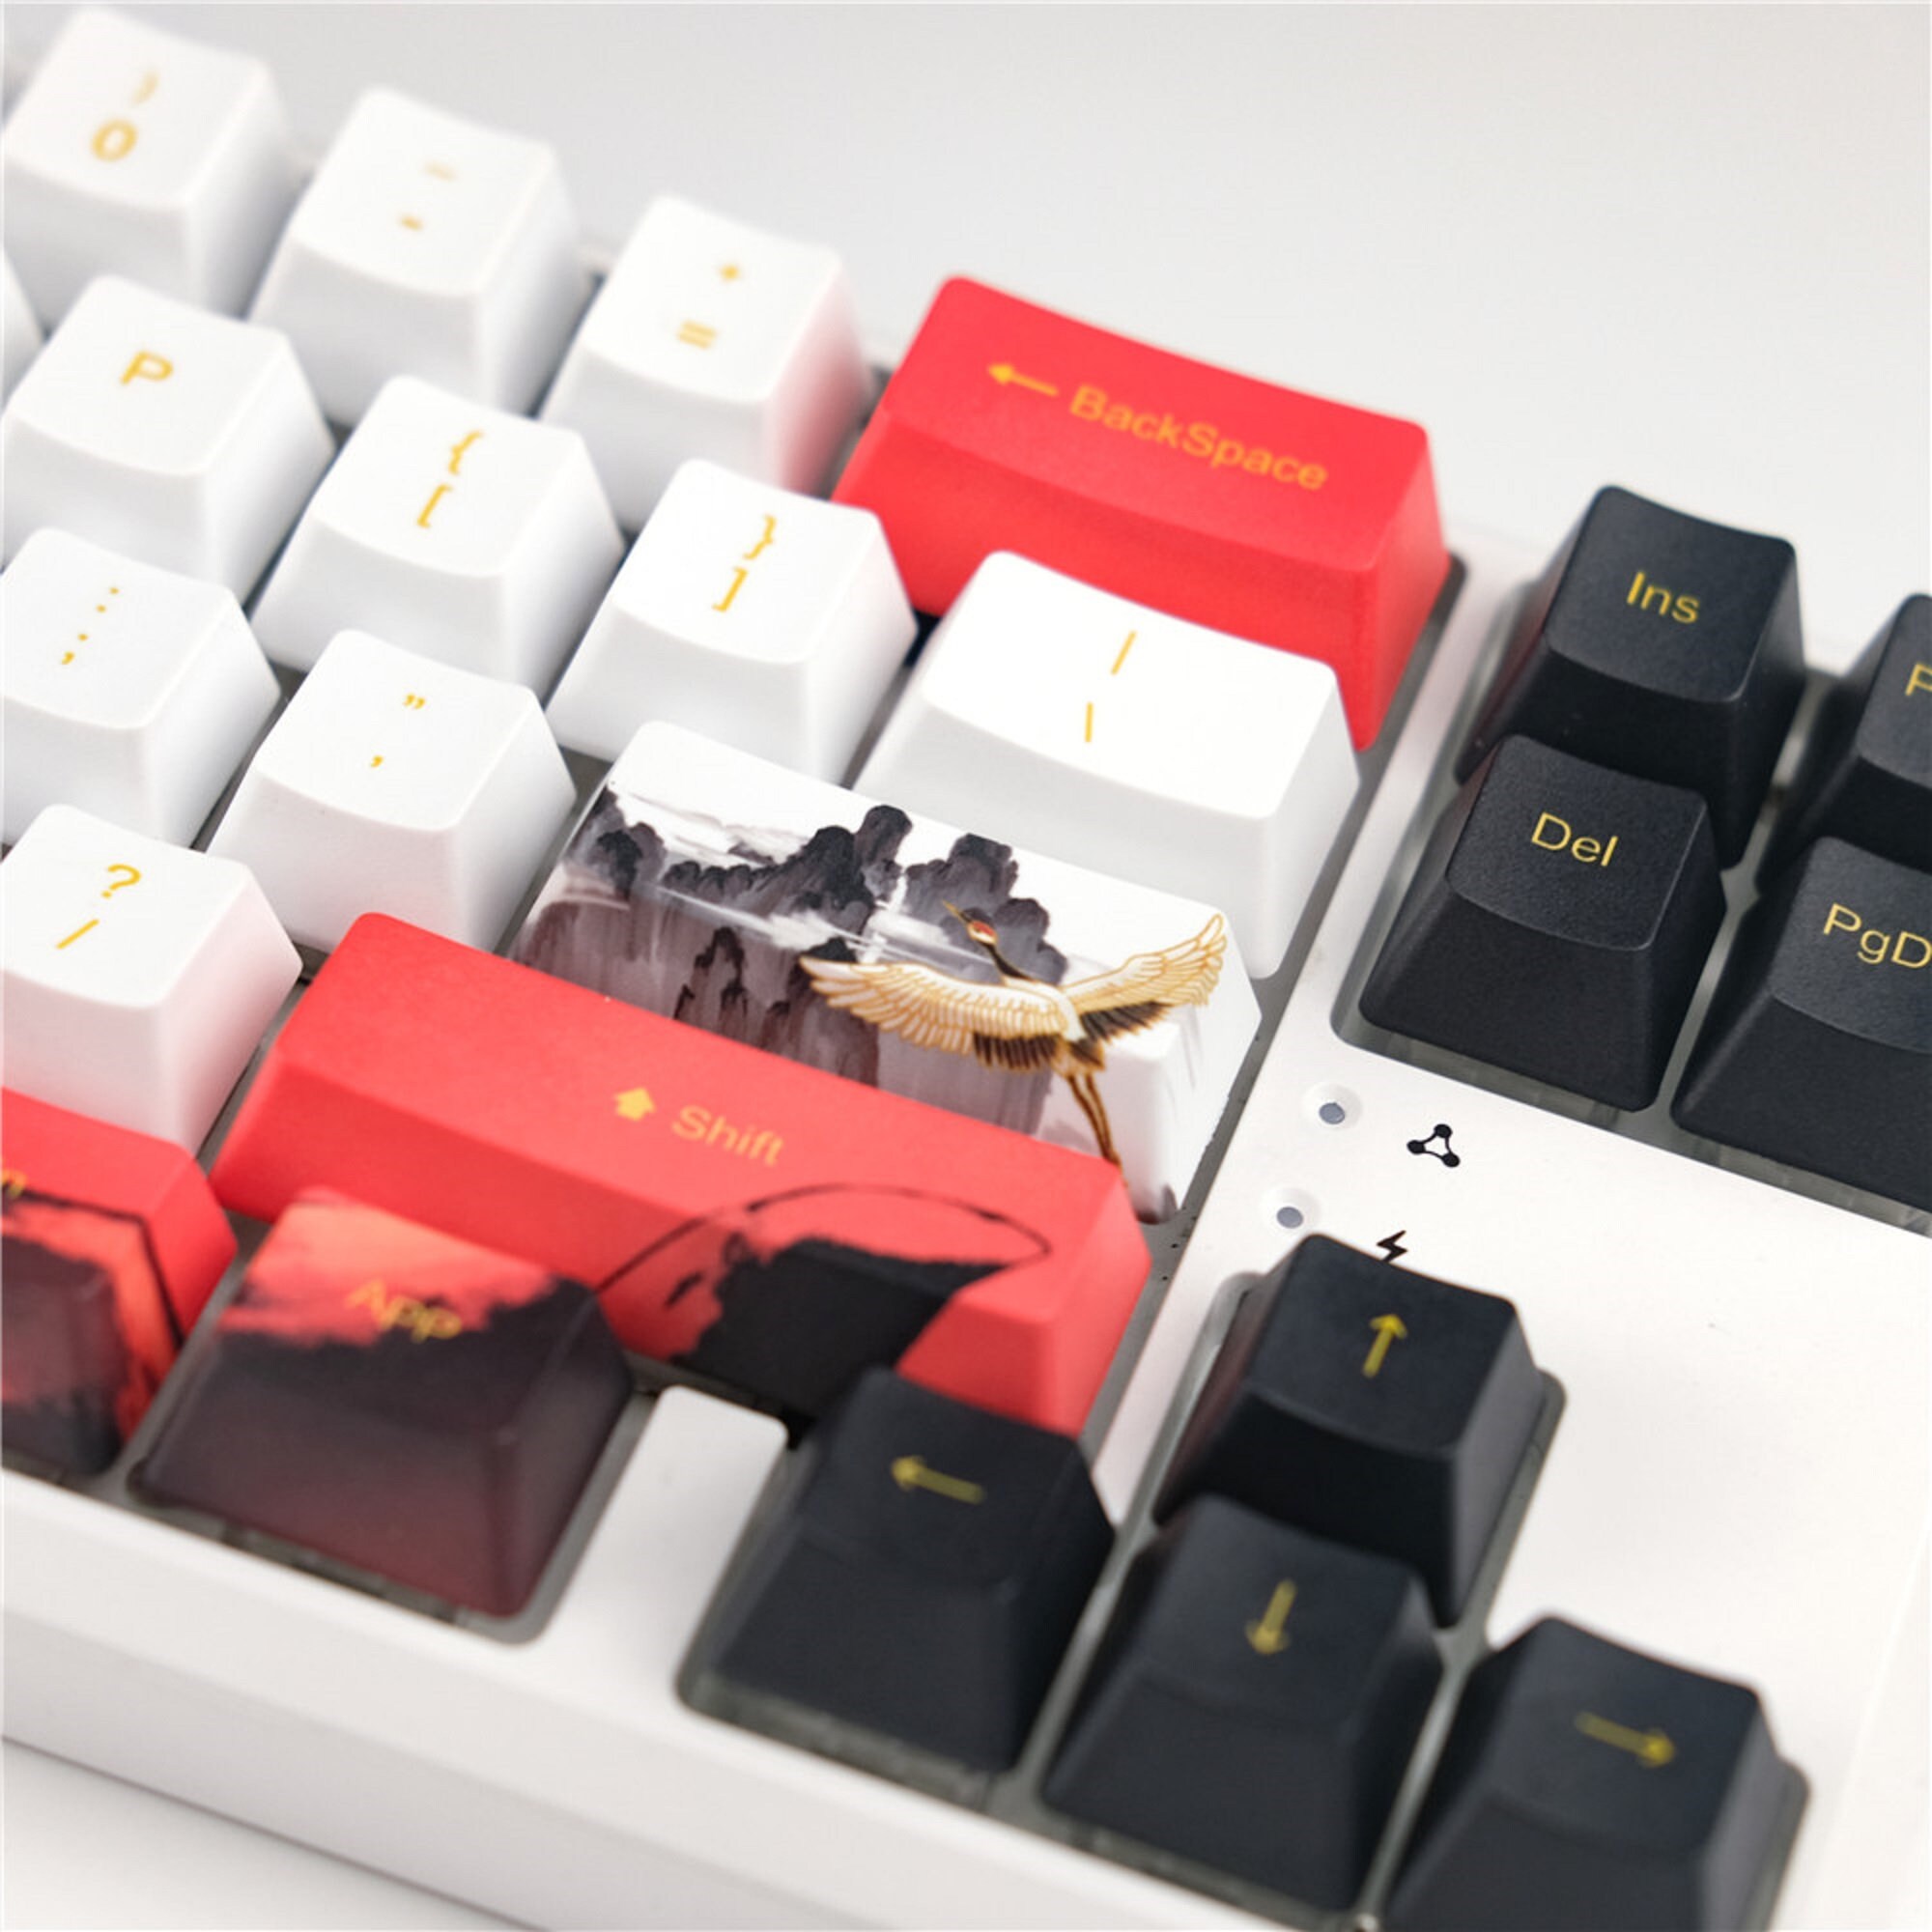 Cool Gold Mountain Keycaps, Black Gray Gradient Keycap Set, Cherry Profile  Keycap Set, Keyboard Accessories, Keyboard Decoration Keycaps. 